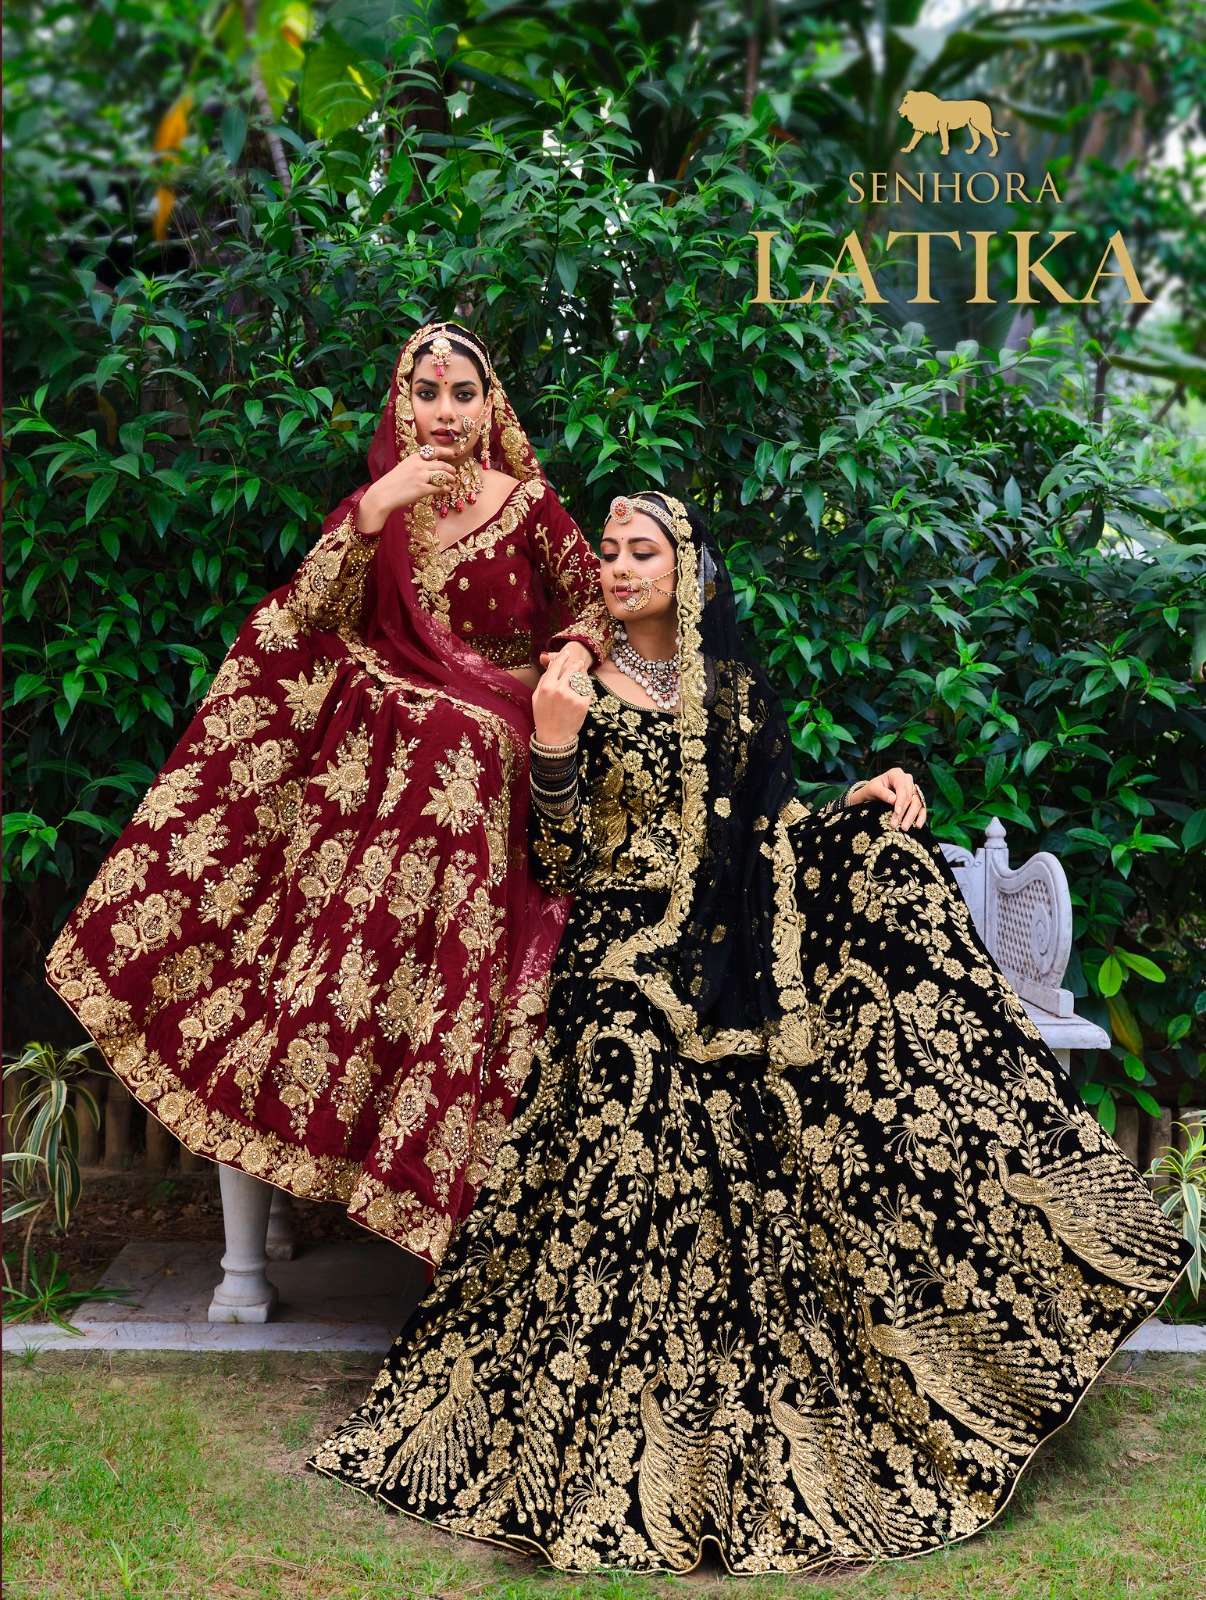 Senhora Latika Dno 3071 - 3073 Series Women Indian Traditional Heavy Muslim Wedding Bridal Lehenga Choli Velvet Party Wedding Bride Wear At Wholesale Price 